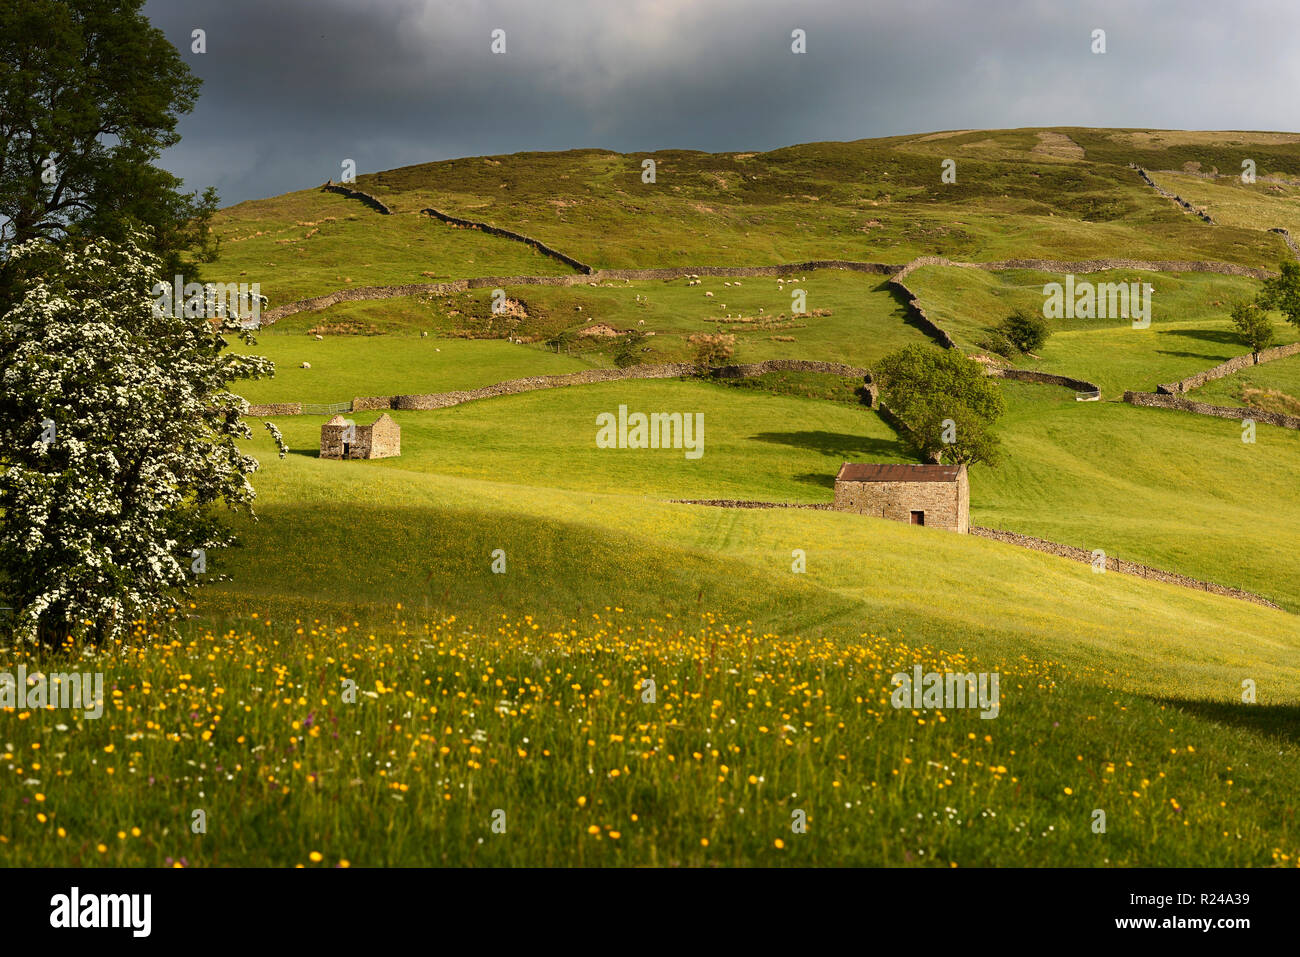 Stone field barns in wild flower meadows, Keld, Swaledale, Yorkshire Dales National Park, North Yorkshire, England, United Kingdom, Europe Stock Photo